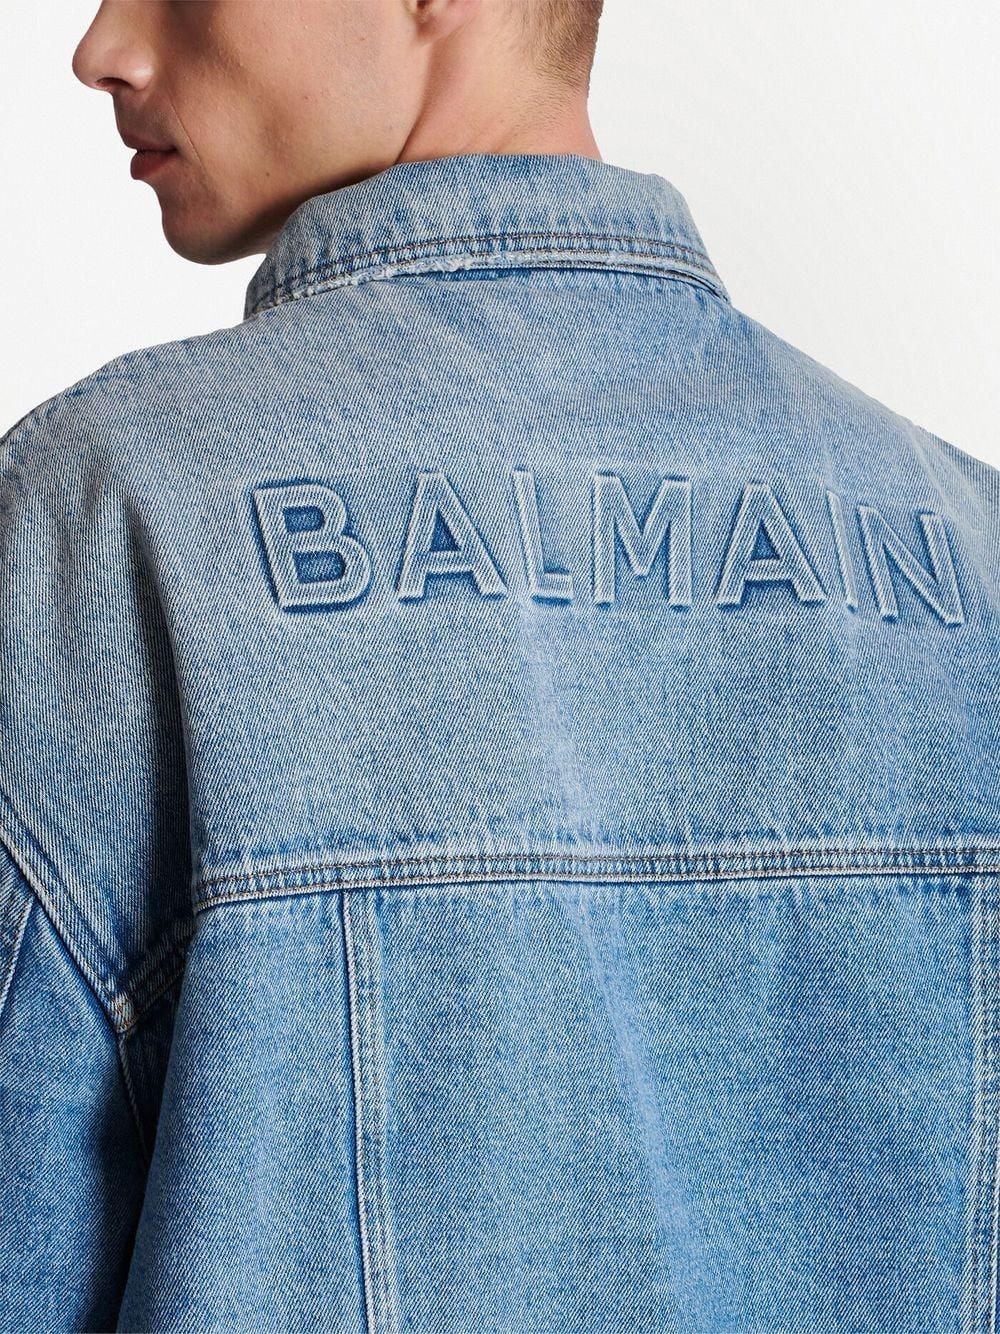 Balmain Monogram Denim Jacket in Blue for Men